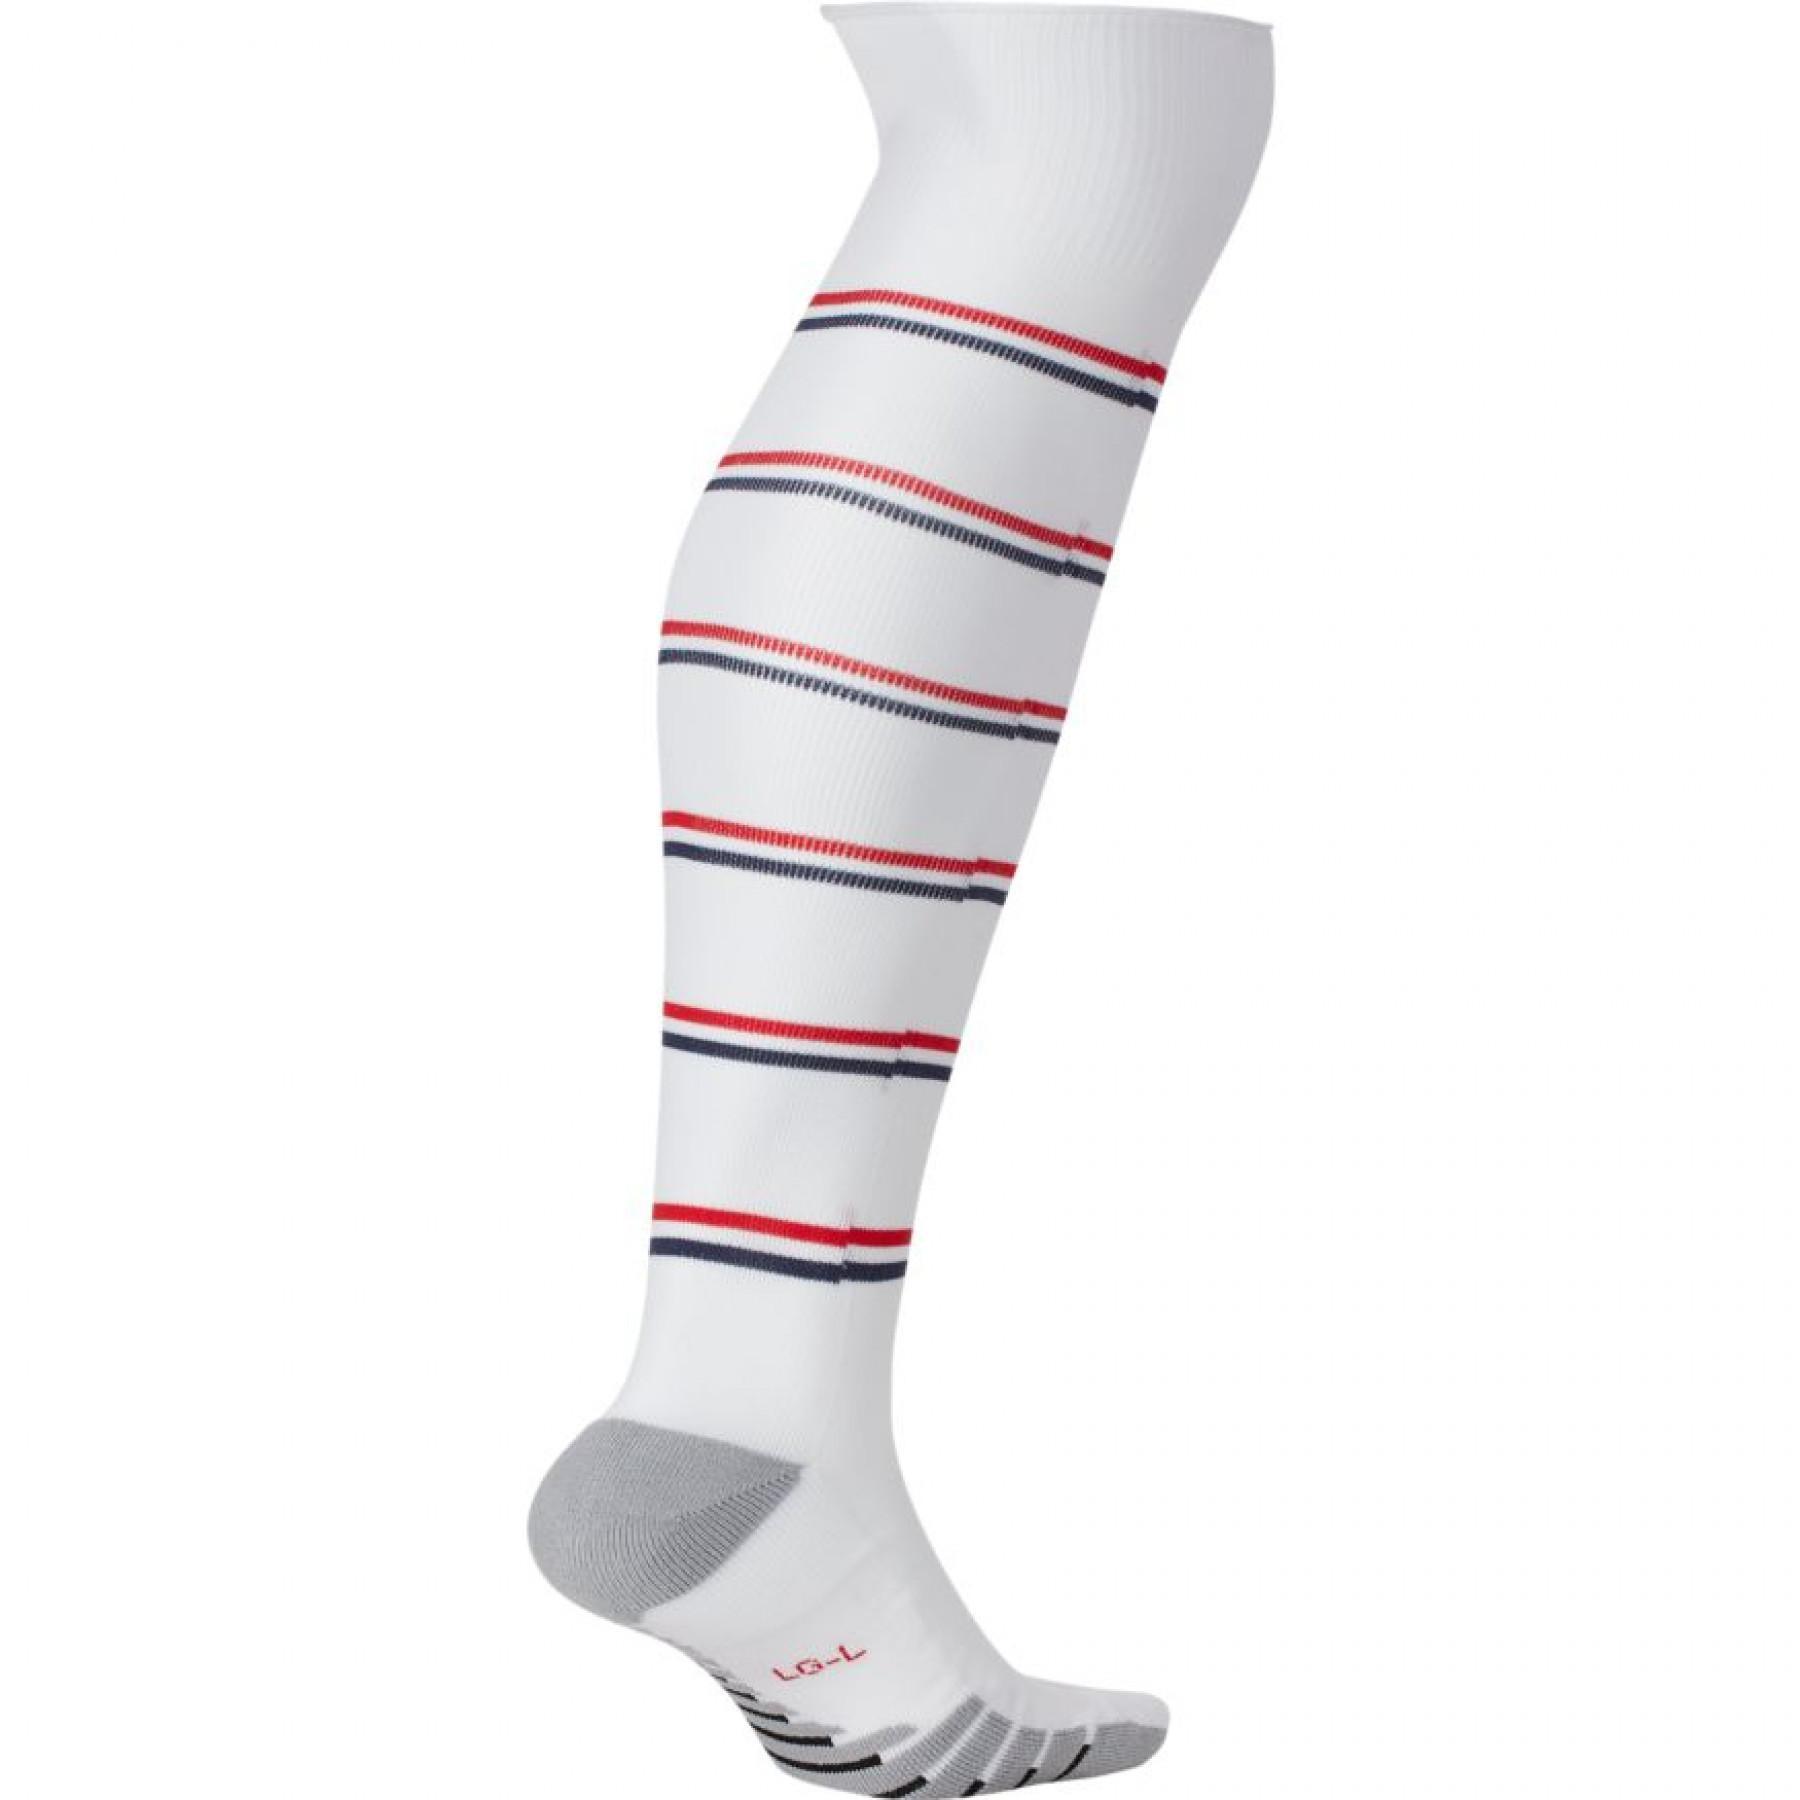 Third socks PSG 2019/20